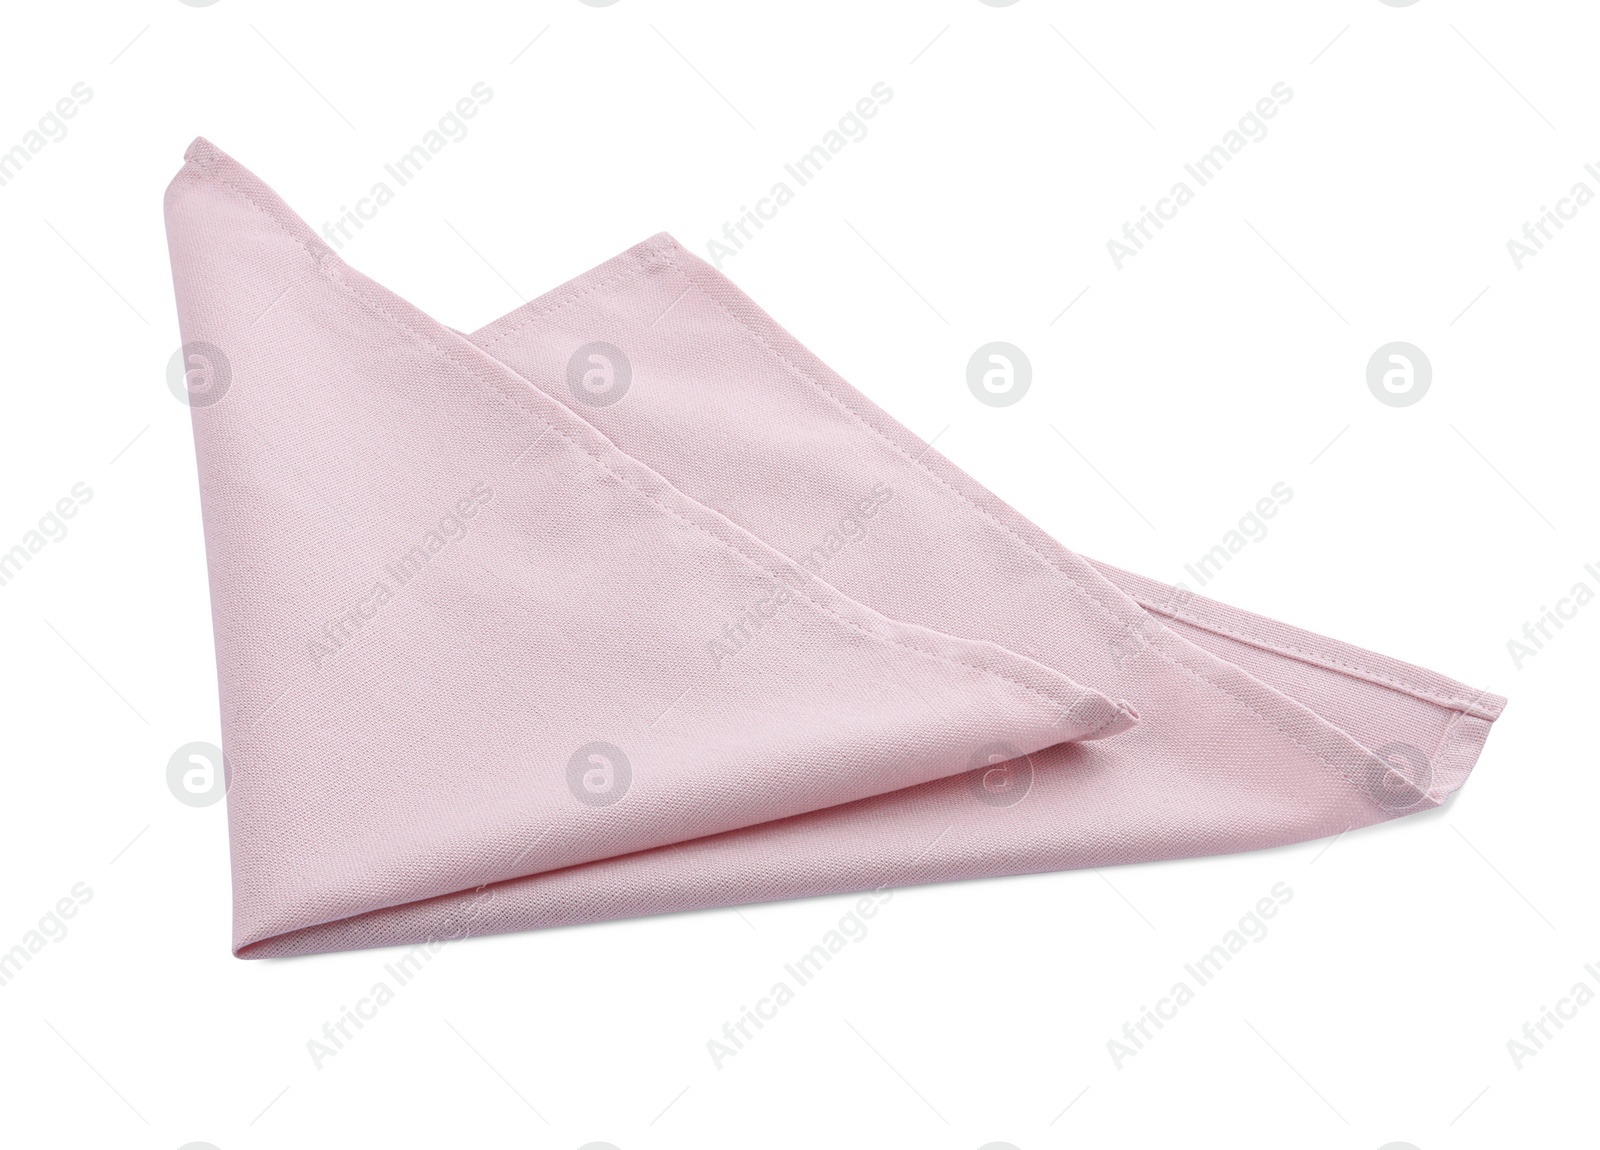 Photo of One pink kitchen napkin isolated on white